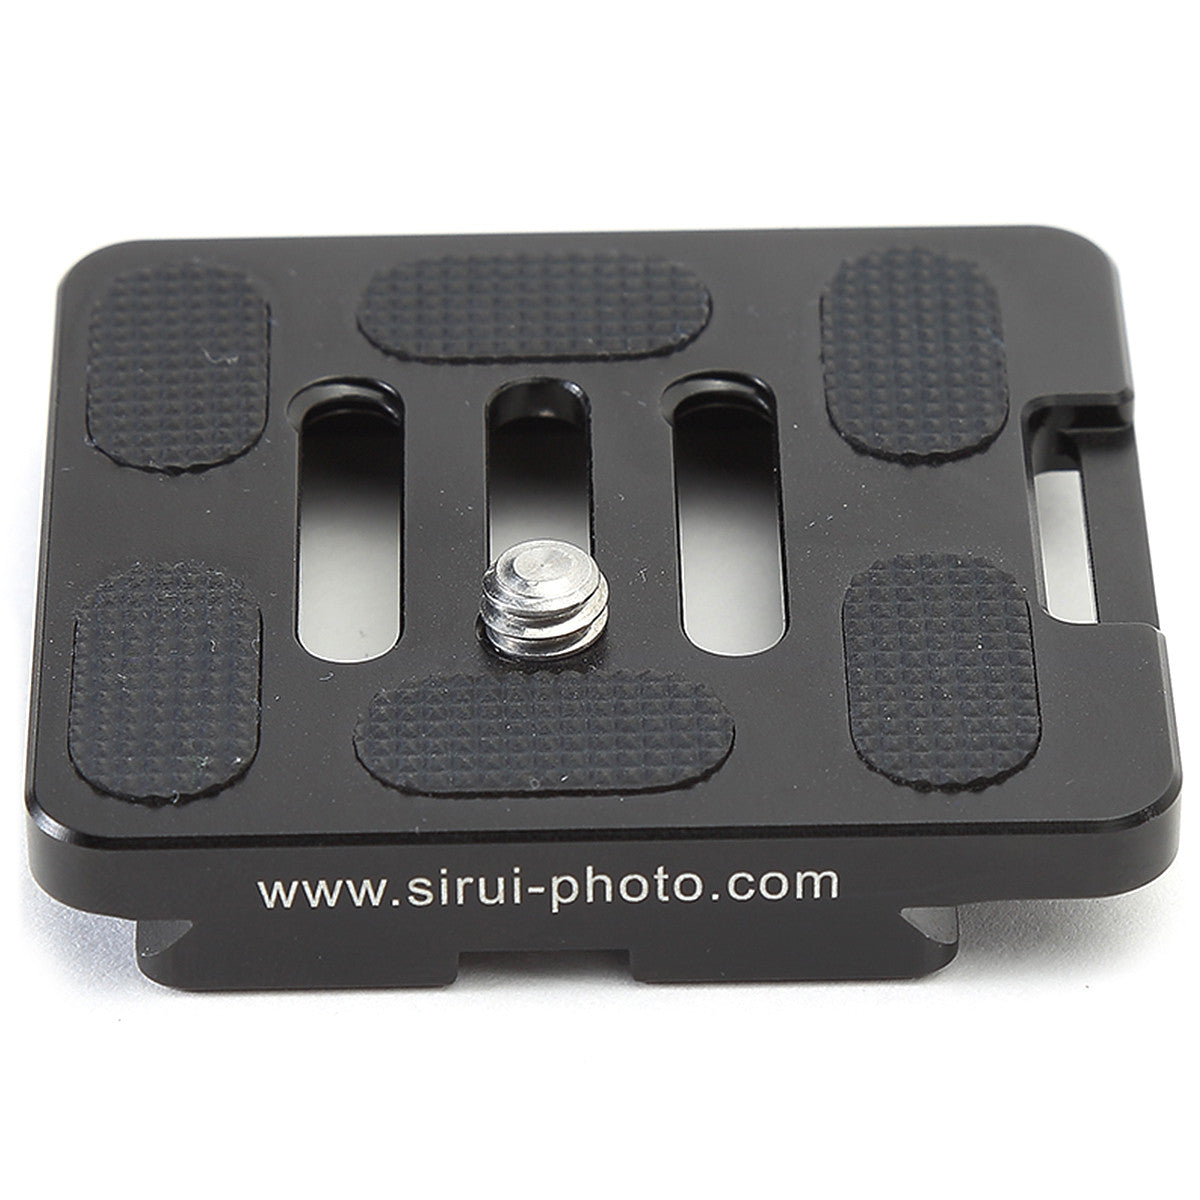 Sirui TY-50X Quick Release Plate in Sirui TY-50X Quick Release Plate - goHUNT Shop by GOHUNT | Sirui - GOHUNT Shop